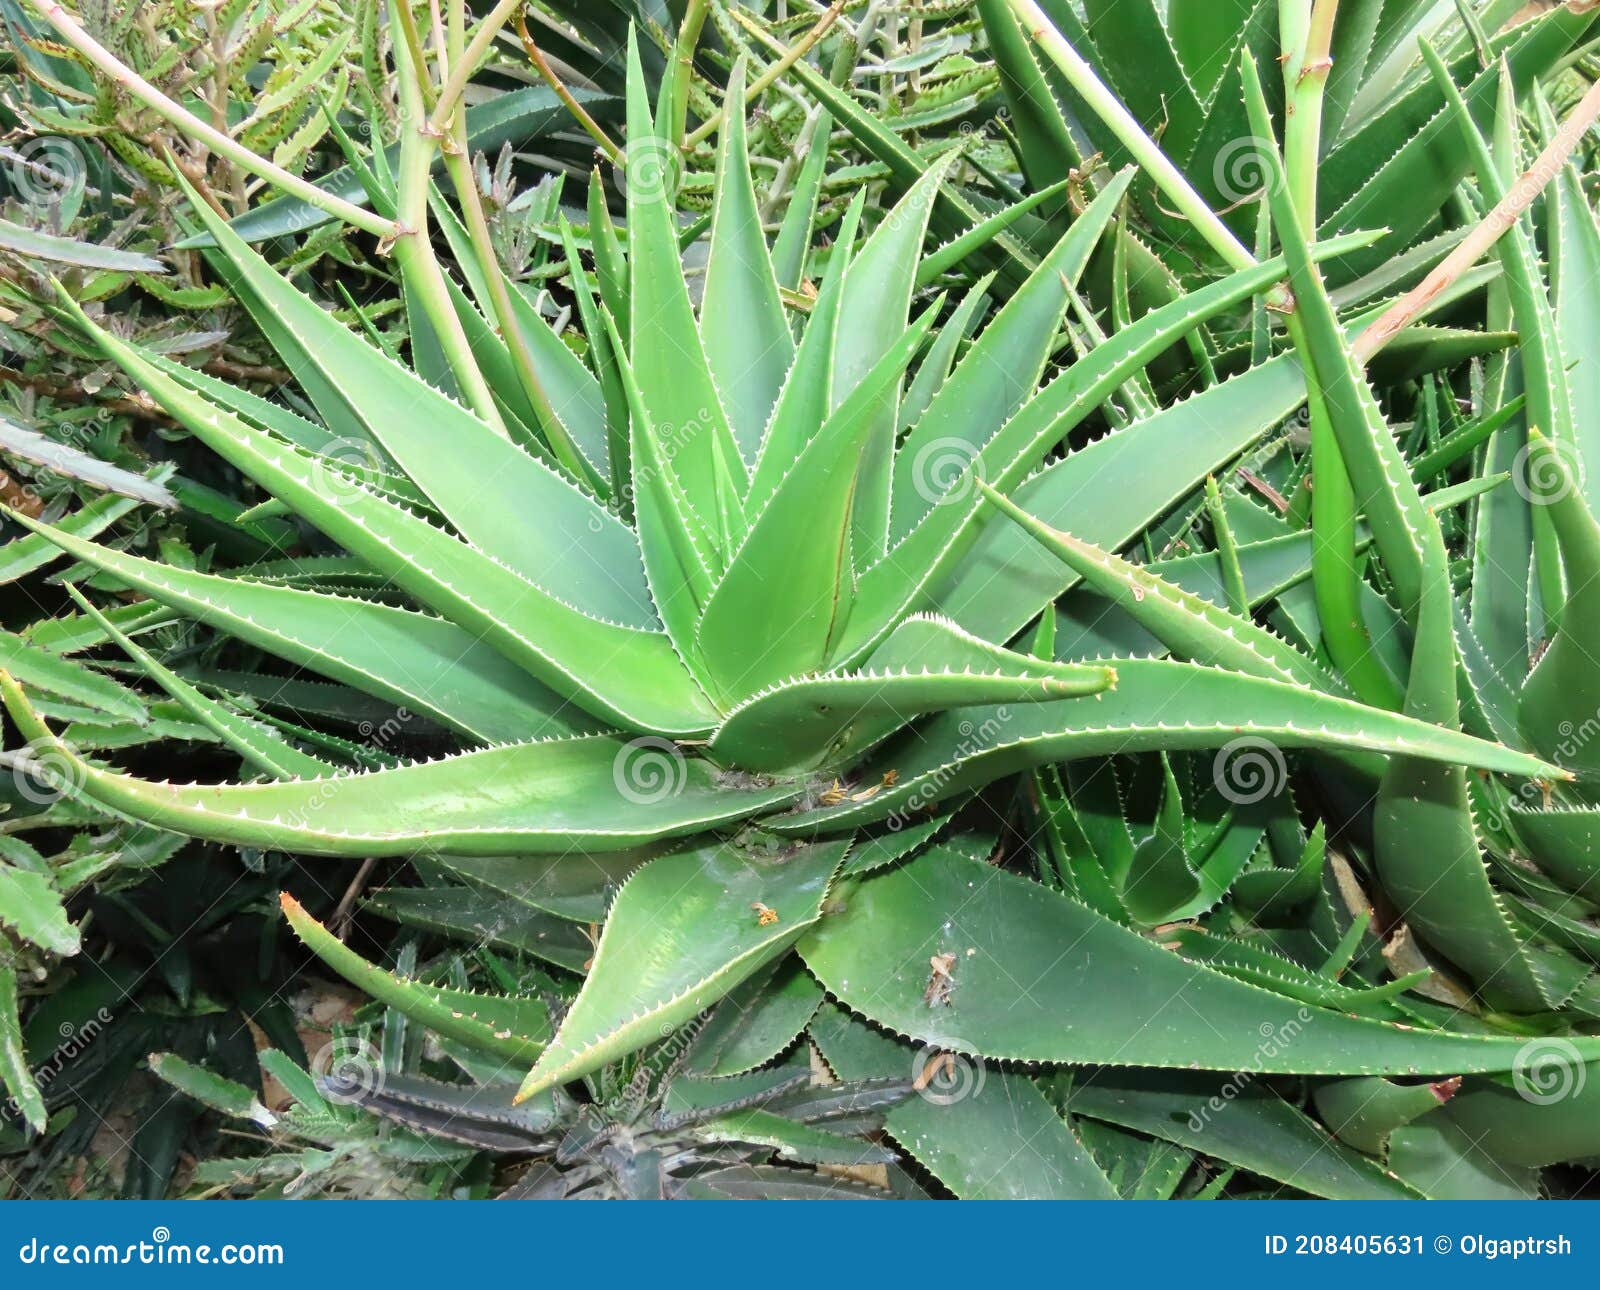 Ijzig waardigheid eetpatroon Beautiful Green Aloe Vera in Winter in Israel. Close-up of Nature. Stock  Image - Image of bright, grass: 208405631